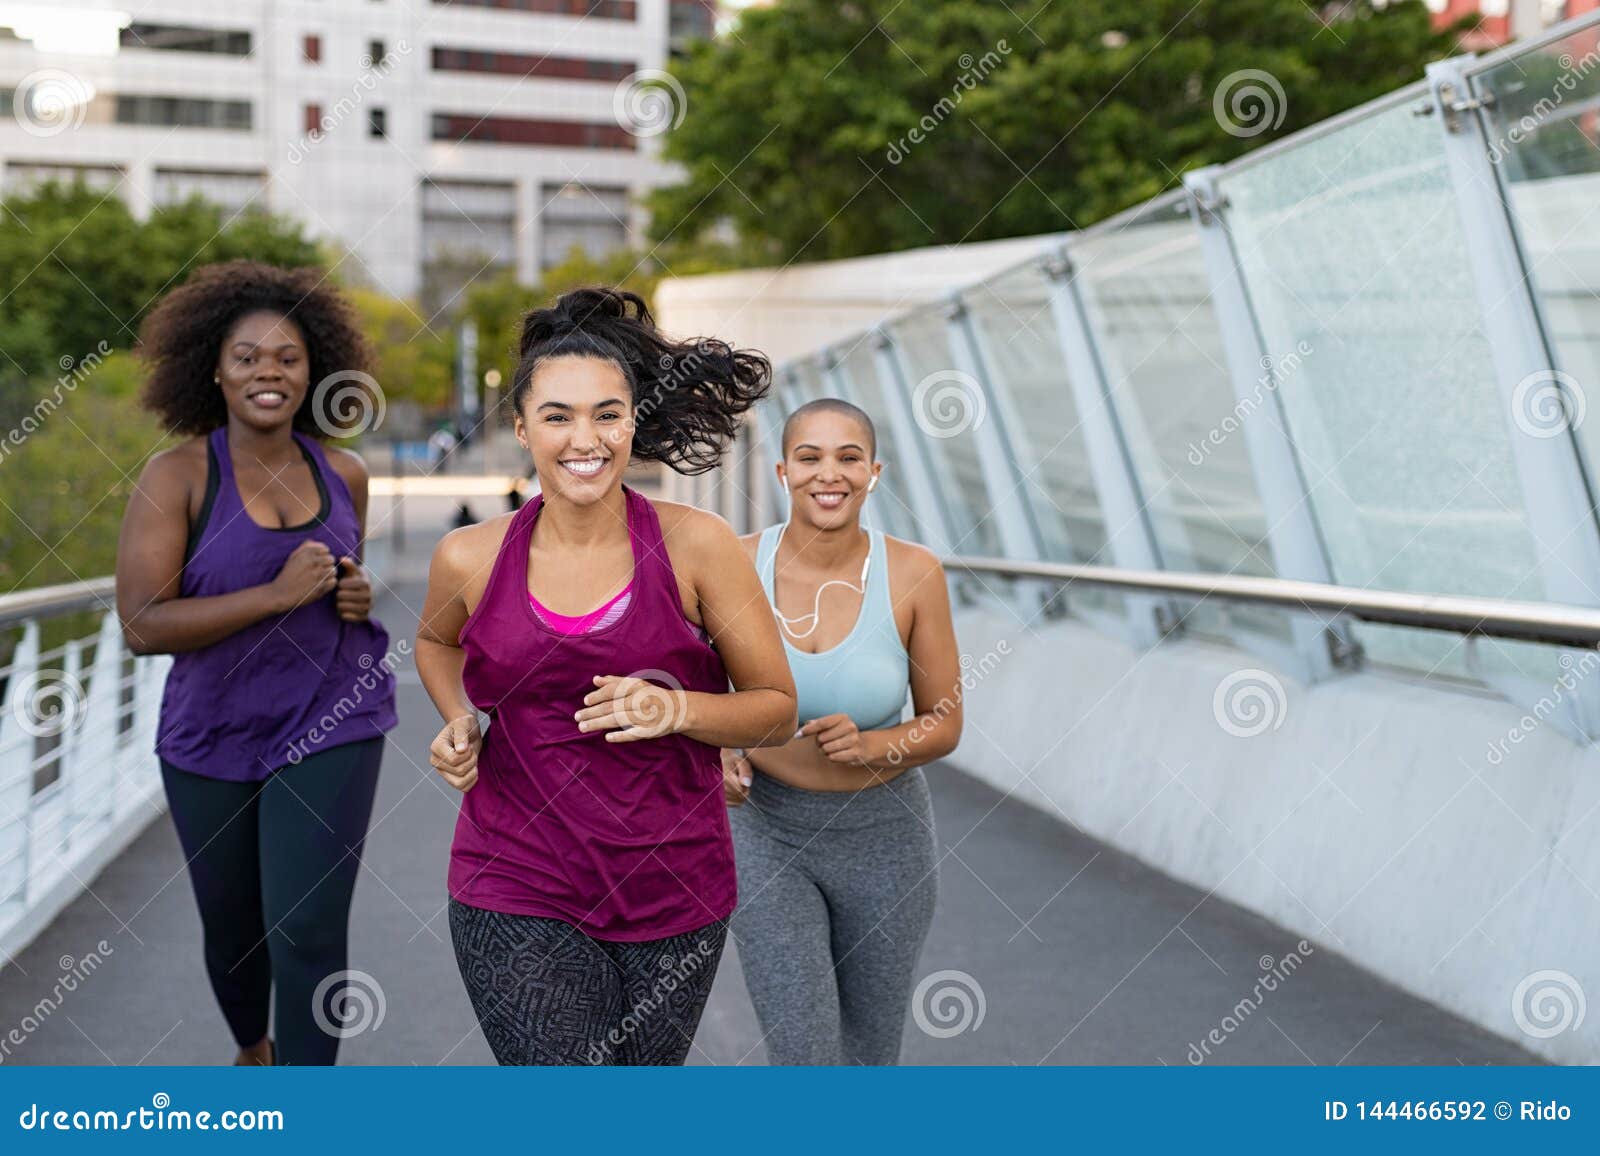 group of natural women jogging